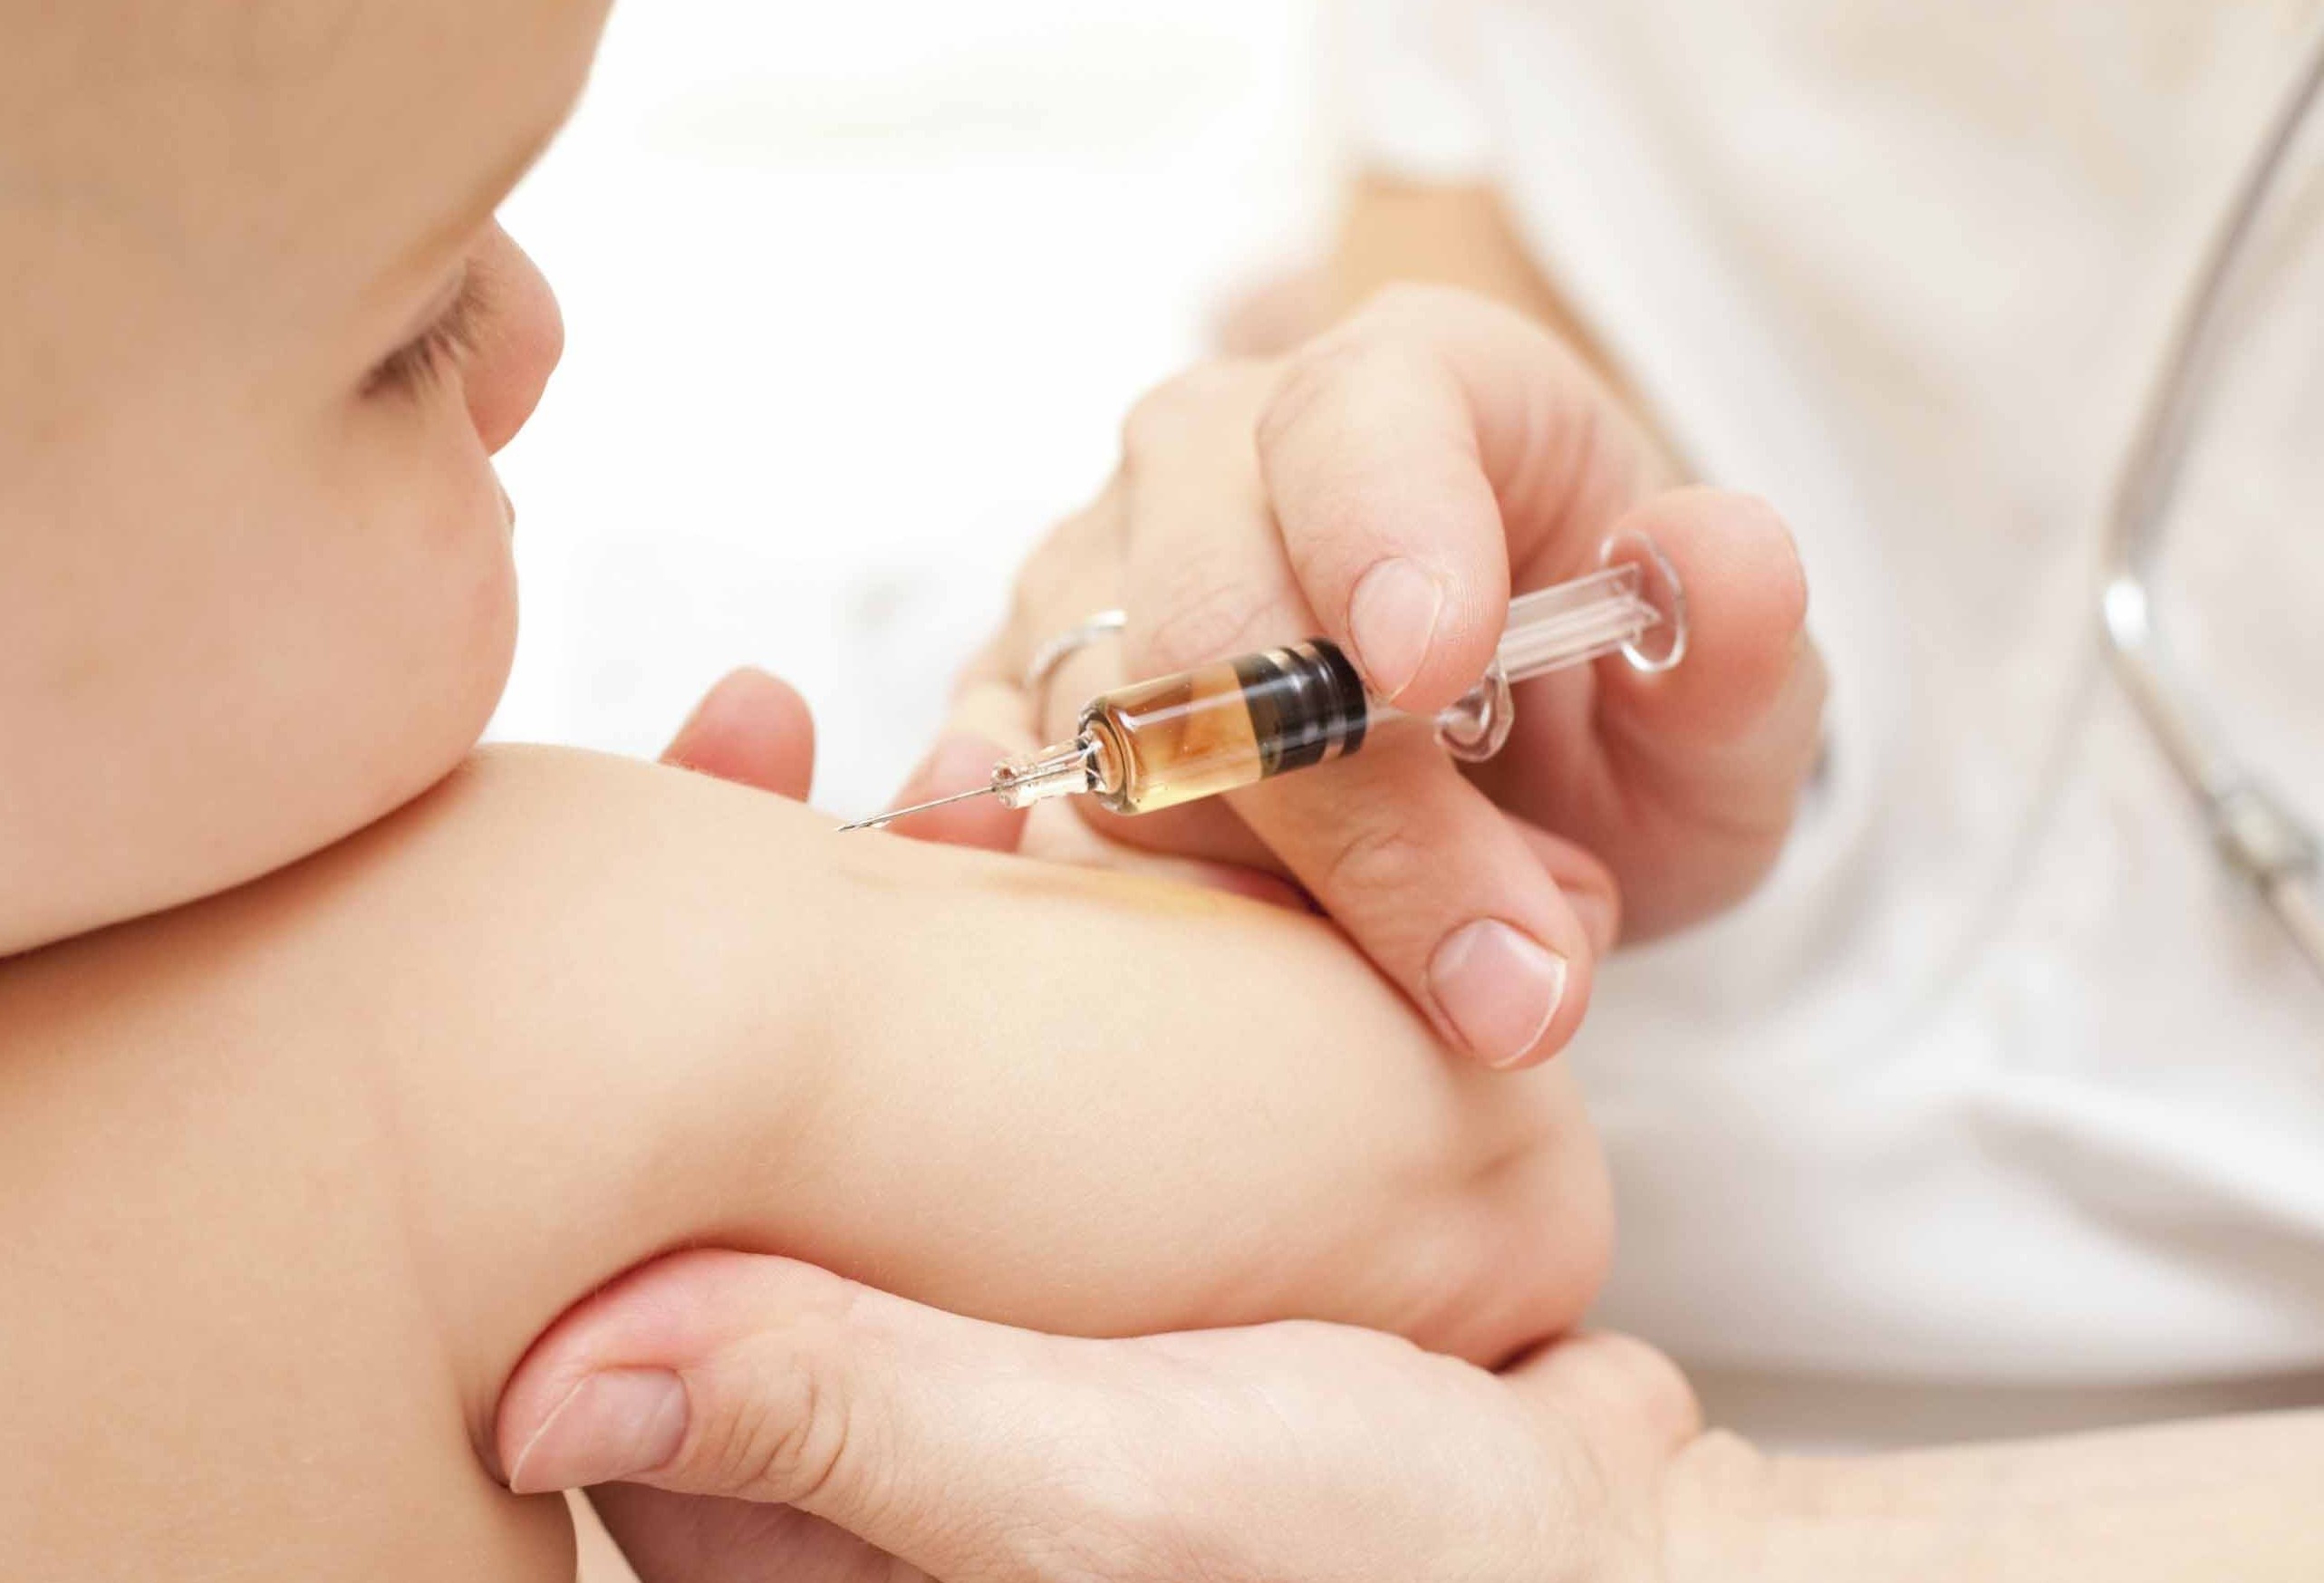 Vaccino Meningitec con "residui metallici", famiglie fanno causa